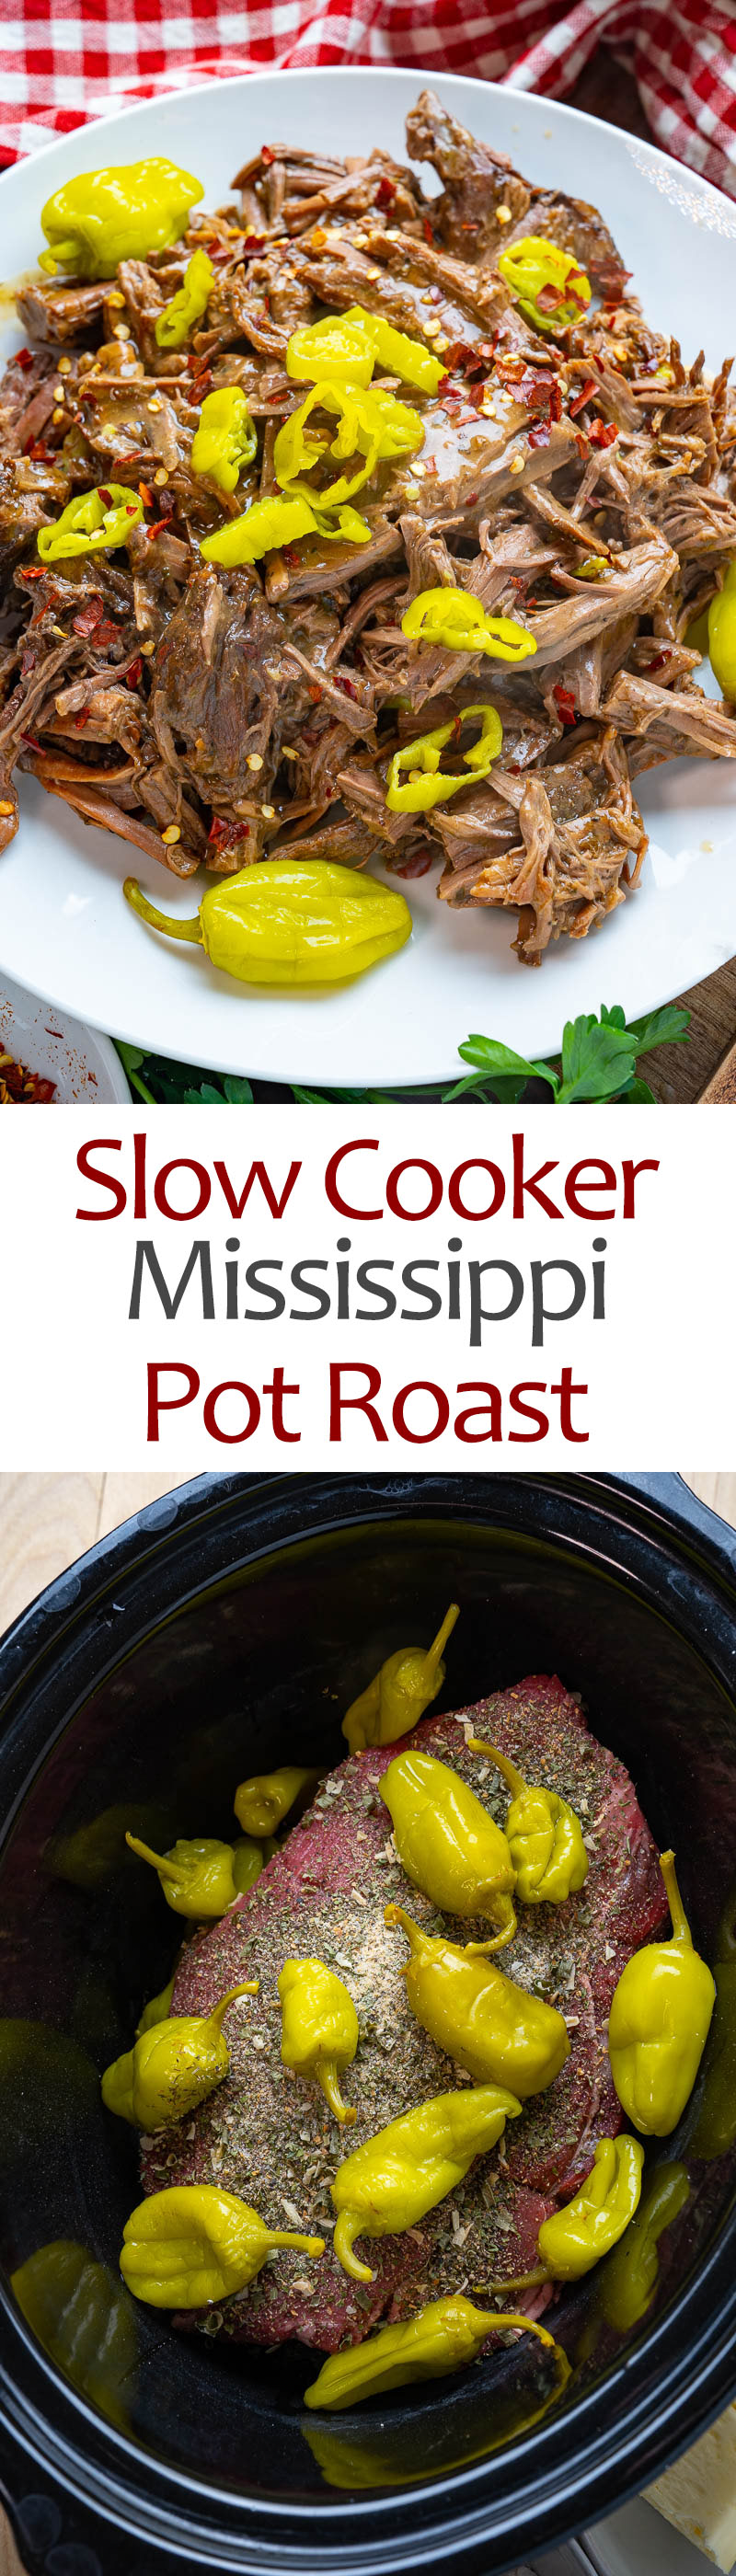 https://www.closetcooking.com/wp-content/uploads/2022/03/Slow-Cooker-Mississippi-Pot-Roast.jpg